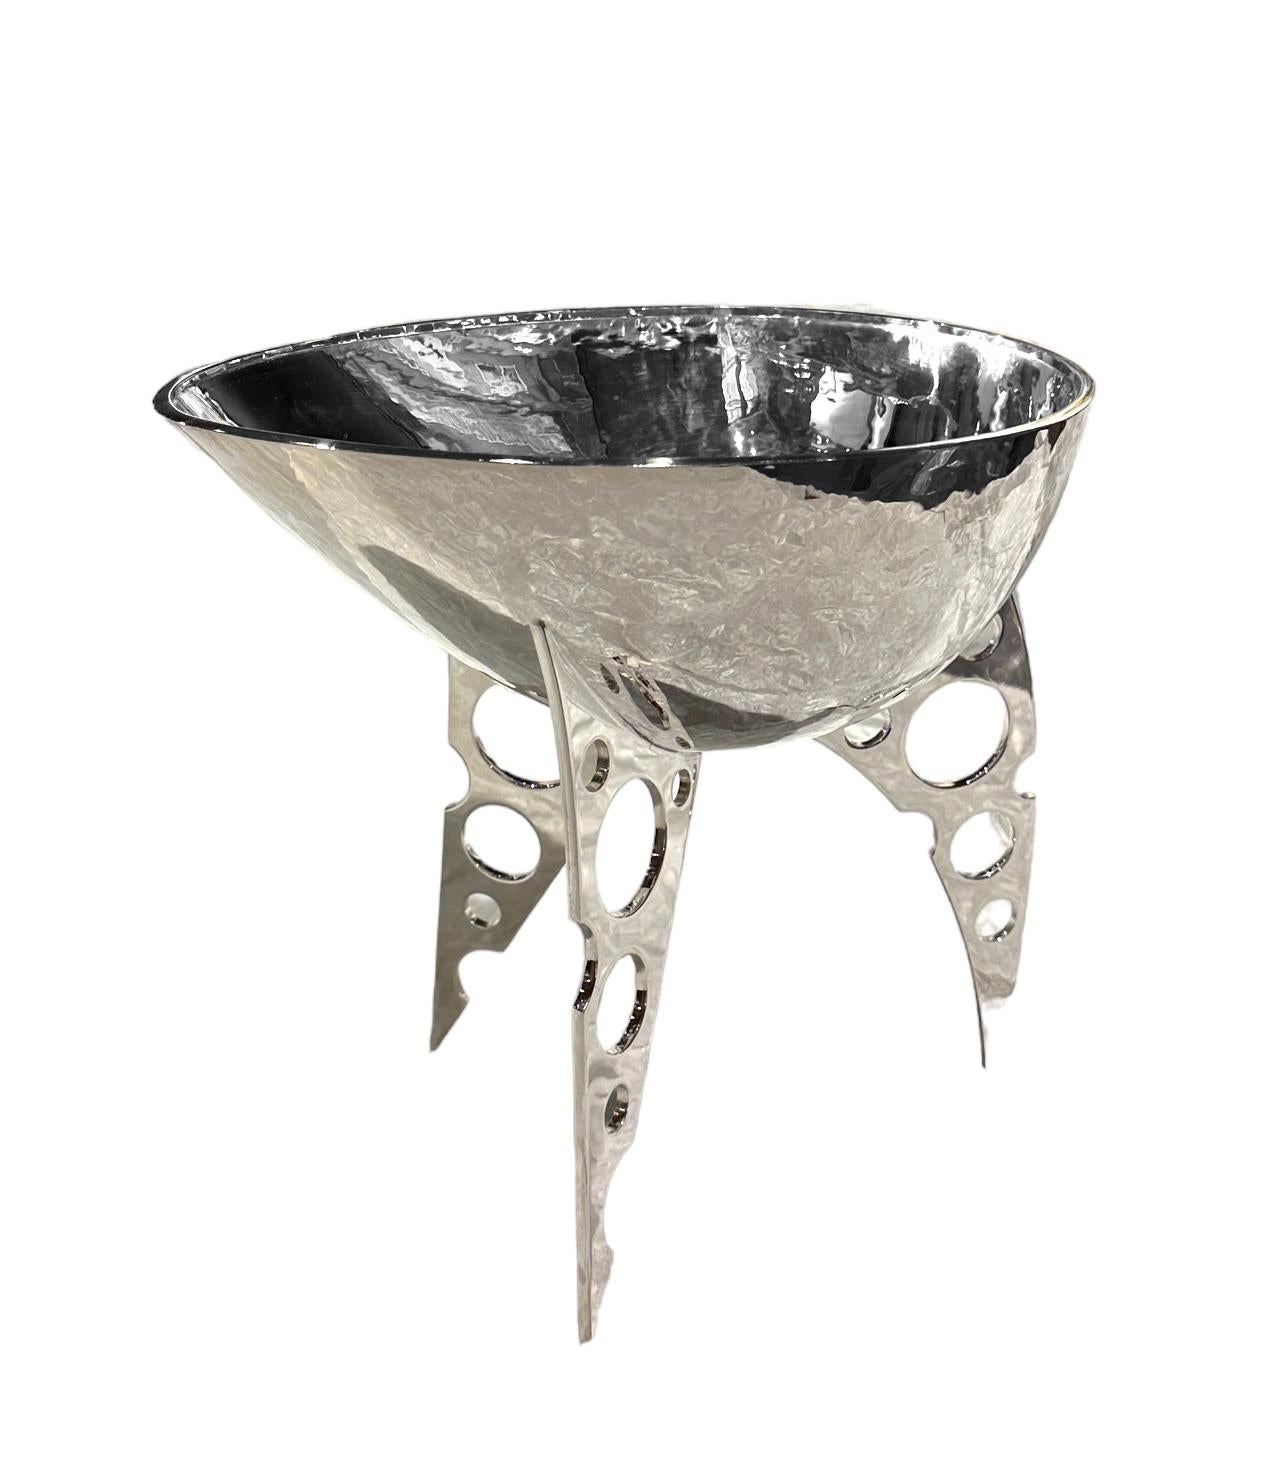 Silver Vessel, Fruit Bowl Sculptural Object by Raju Peddada - 